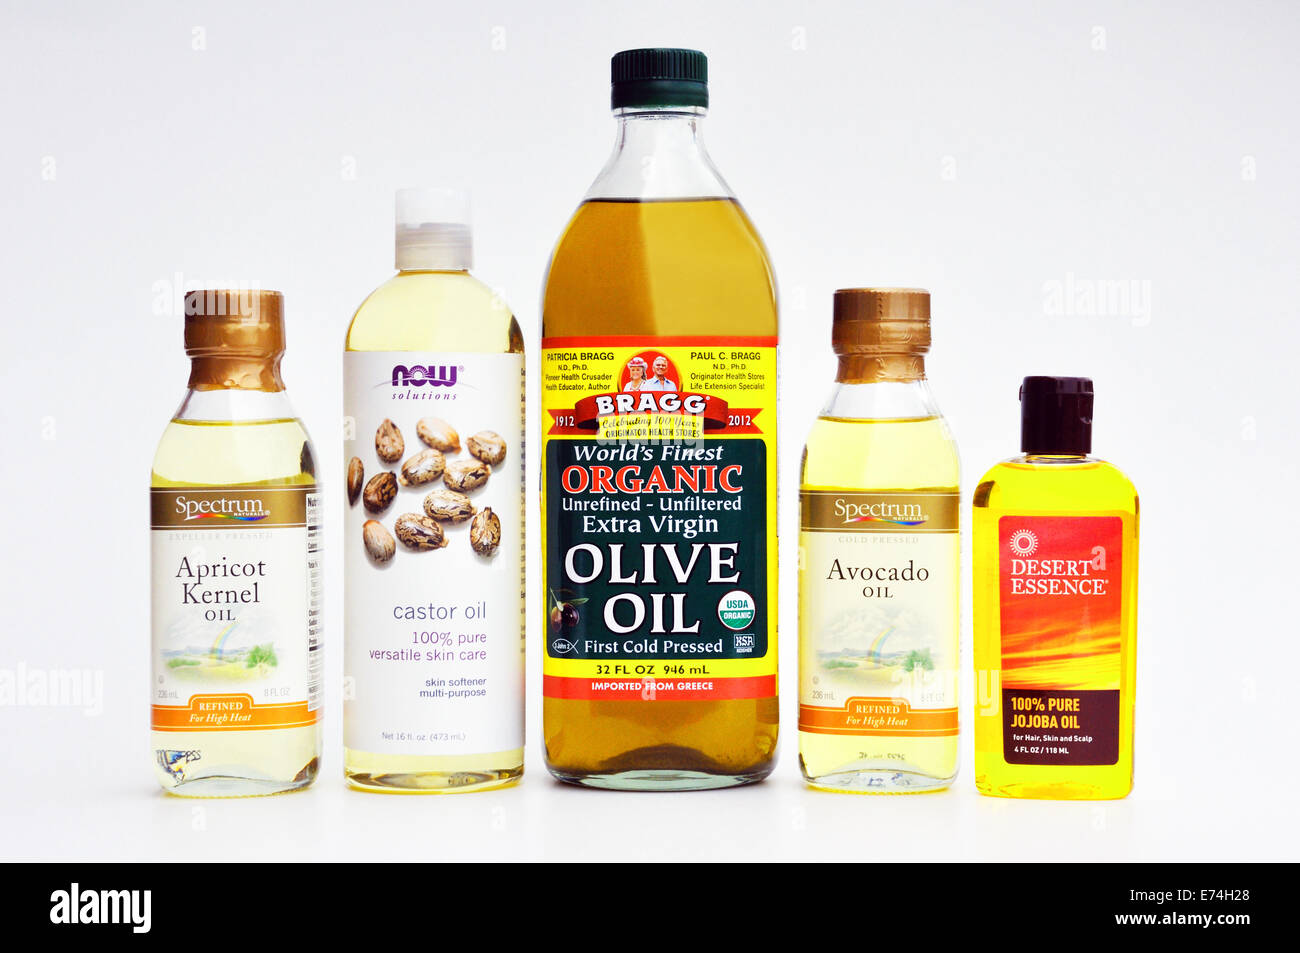 Aceites: Apricot Kernel, castor, aceite de oliva, aguacate y jojoba Foto de stock